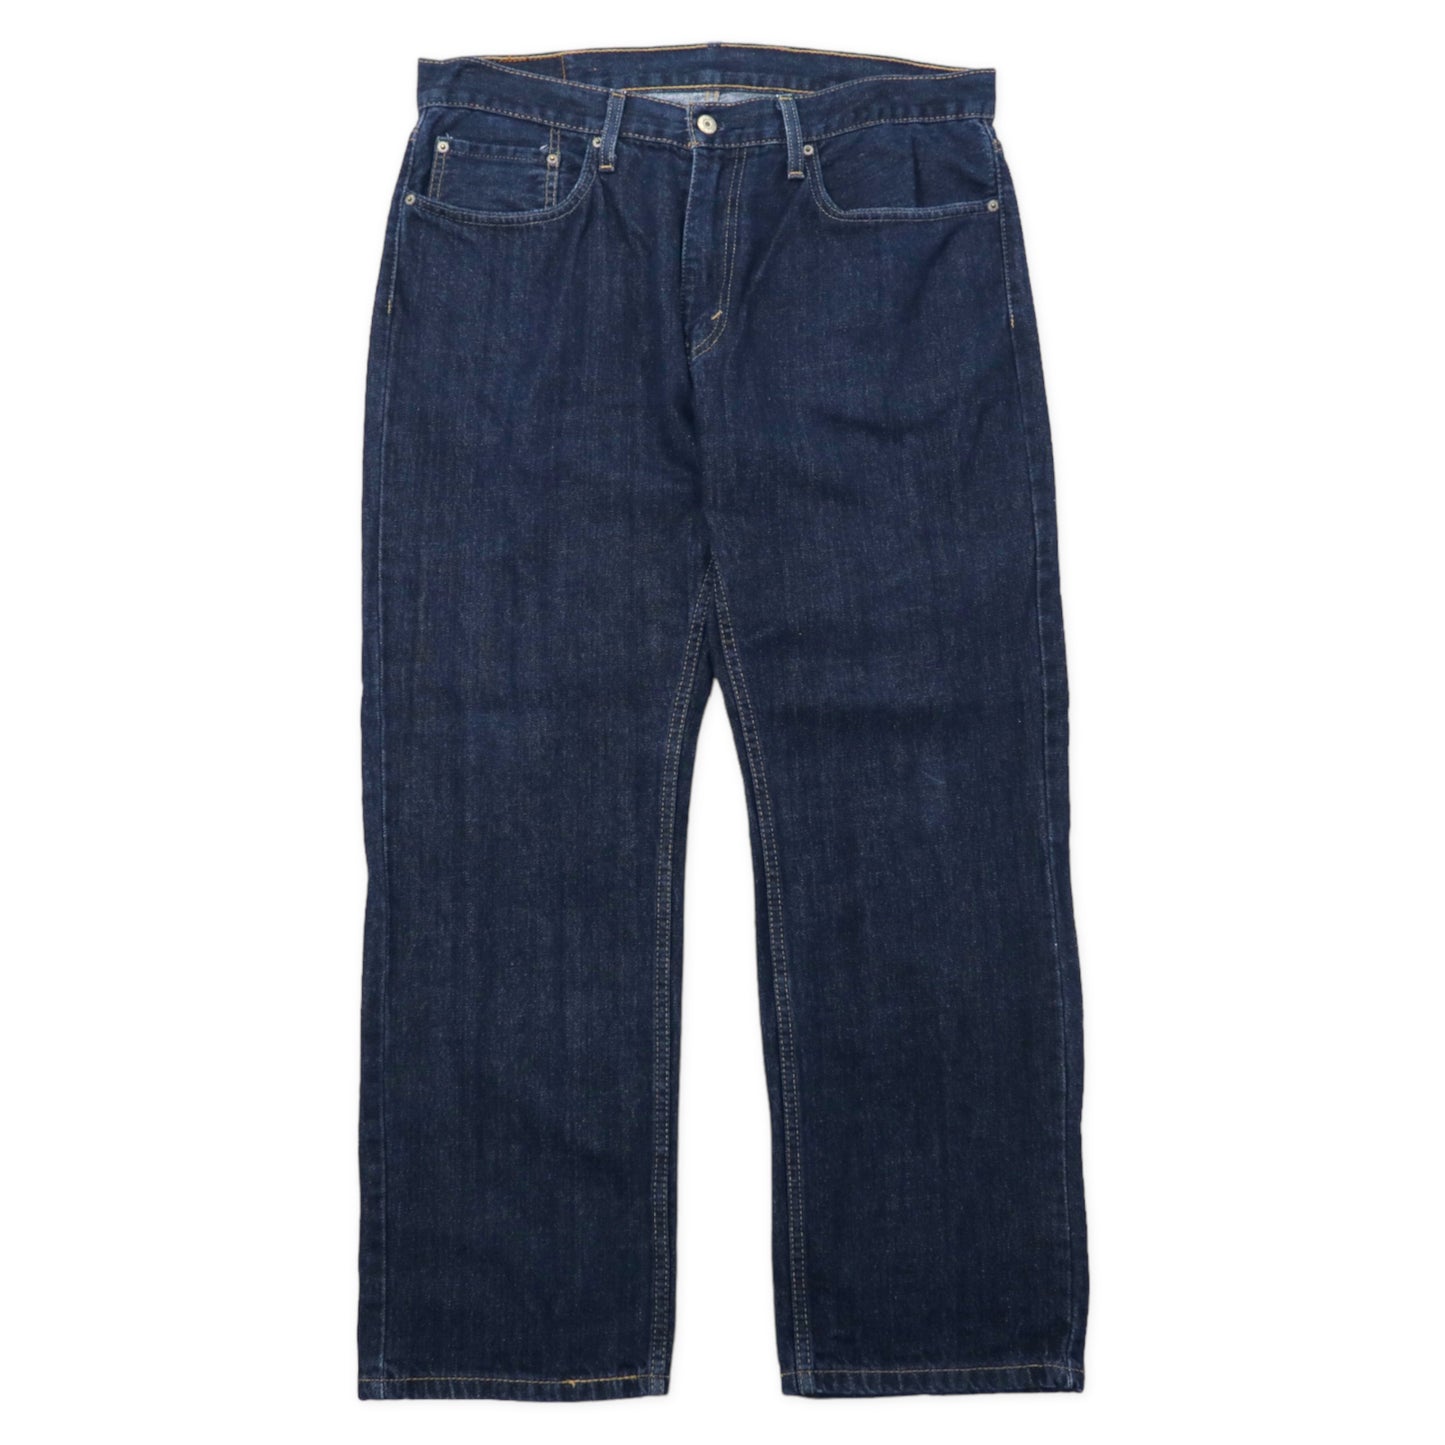 Levi's 559 デニムパンツ 36 ブルー 濃紺 Loose Straight Leg Dark Blue Relaxed Denim Jeans 559-4010